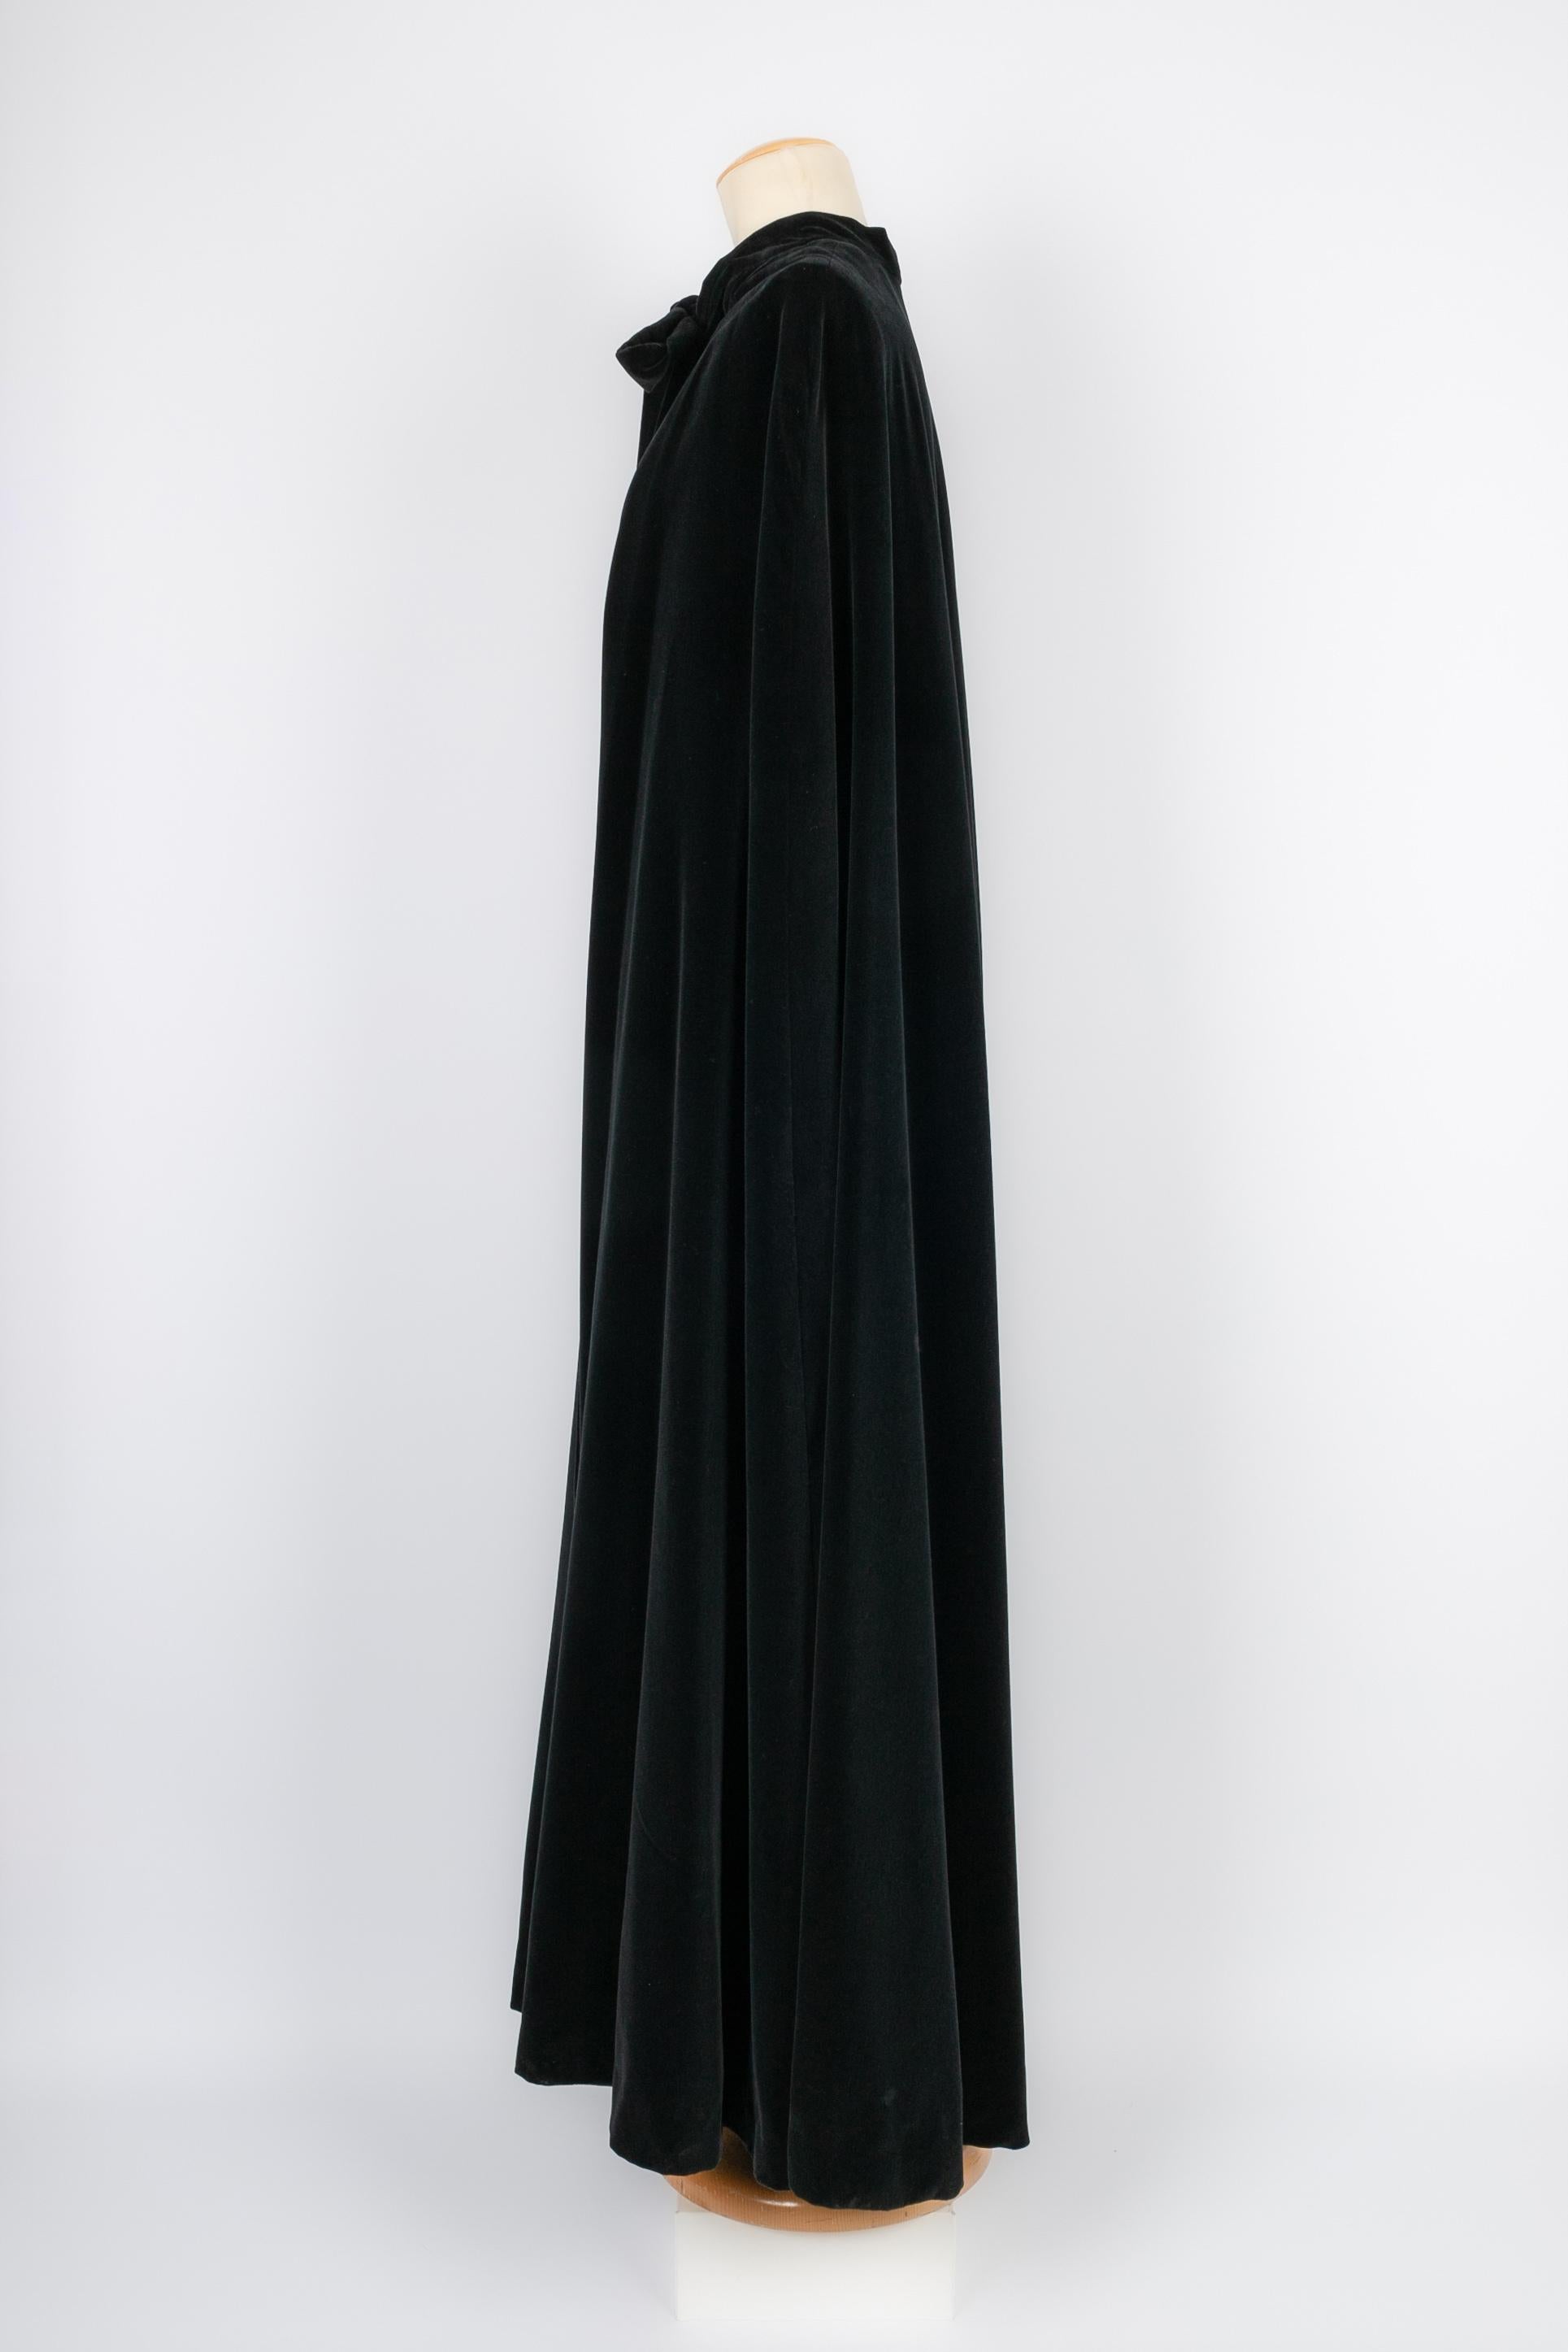 JEAN-LOUIS SCHERRER - (Made in France) Black velvet long cape. No size nor composition label, it fits a 36FR/38FR.

Condition:
Very good condition

Dimensions:
Shoulder width: 40 cm - Length: 150 cm

M87